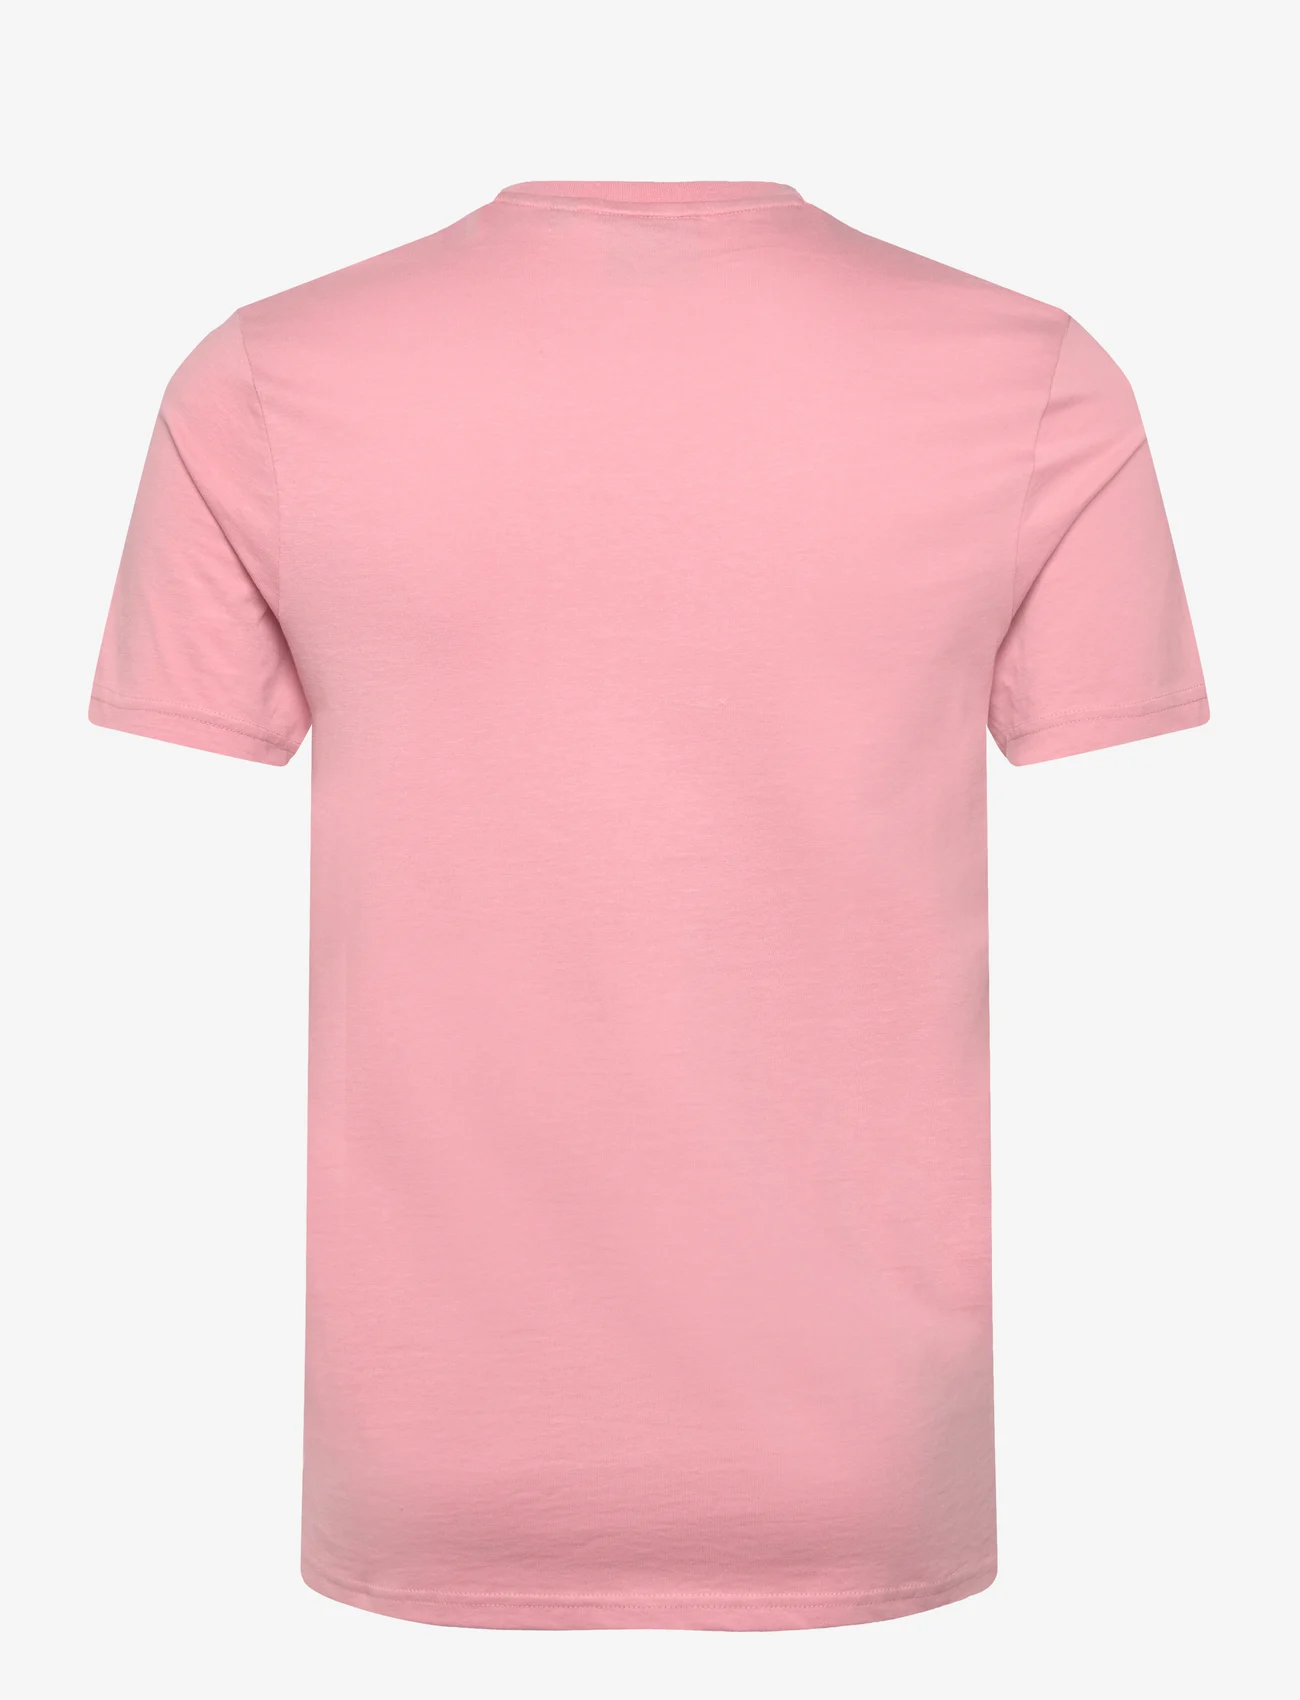 Lyle & Scott - Pocket T-Shirt - kortärmade t-shirts - x238 palm pink - 1